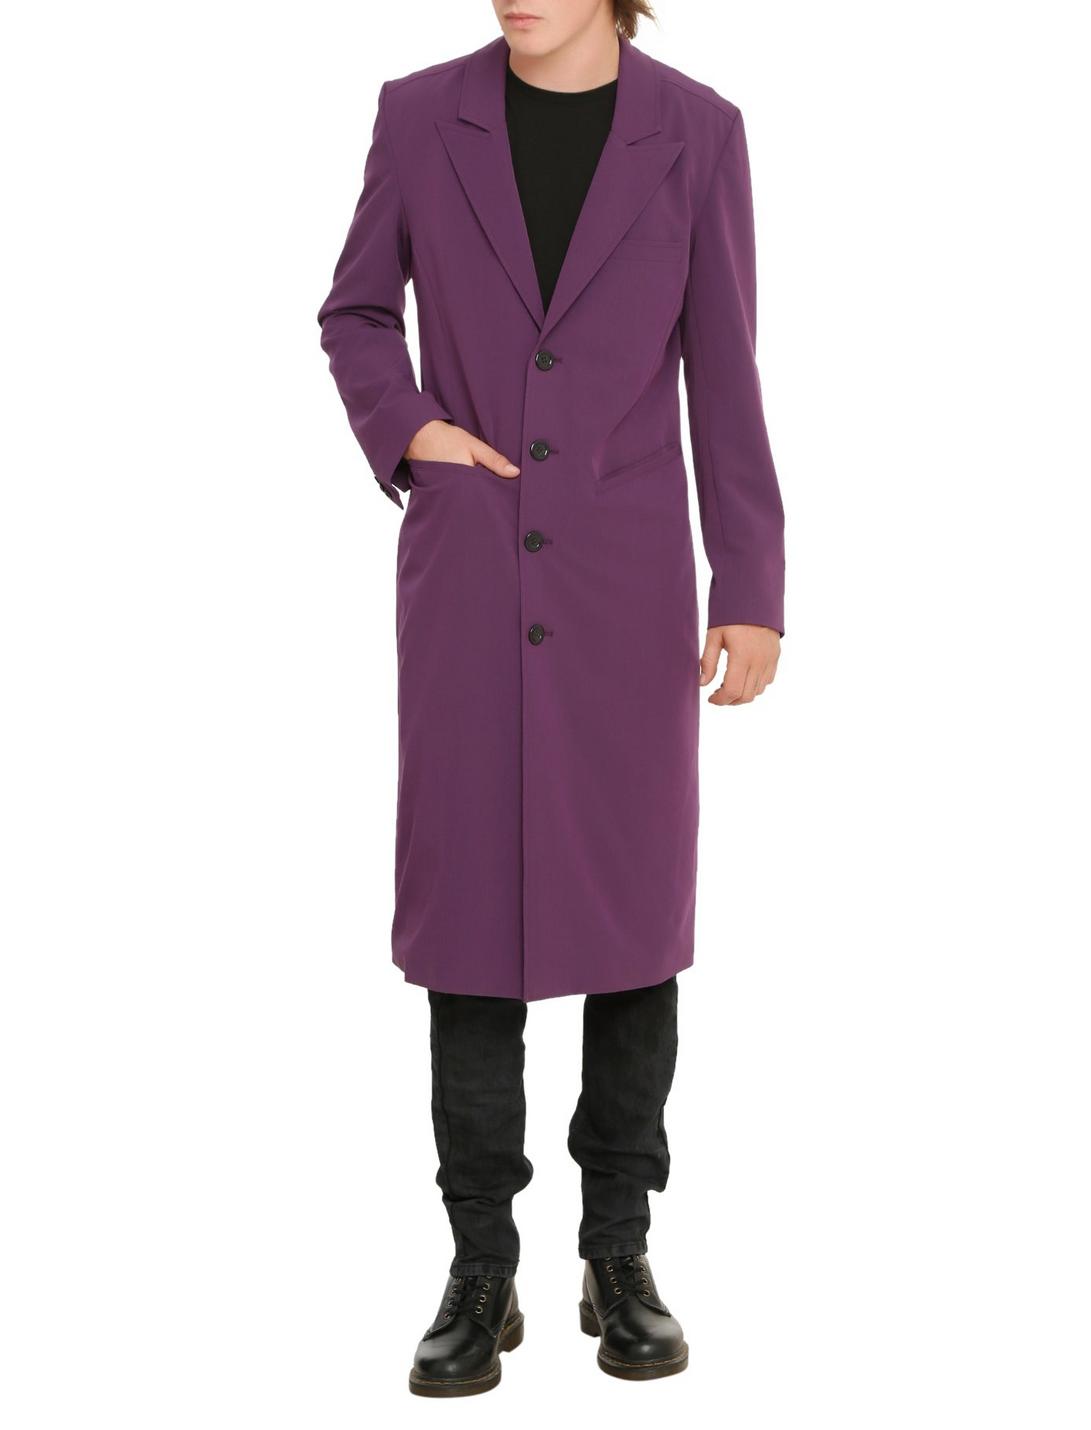 RUDE Purple Trench Coat, PURPLE, hi-res